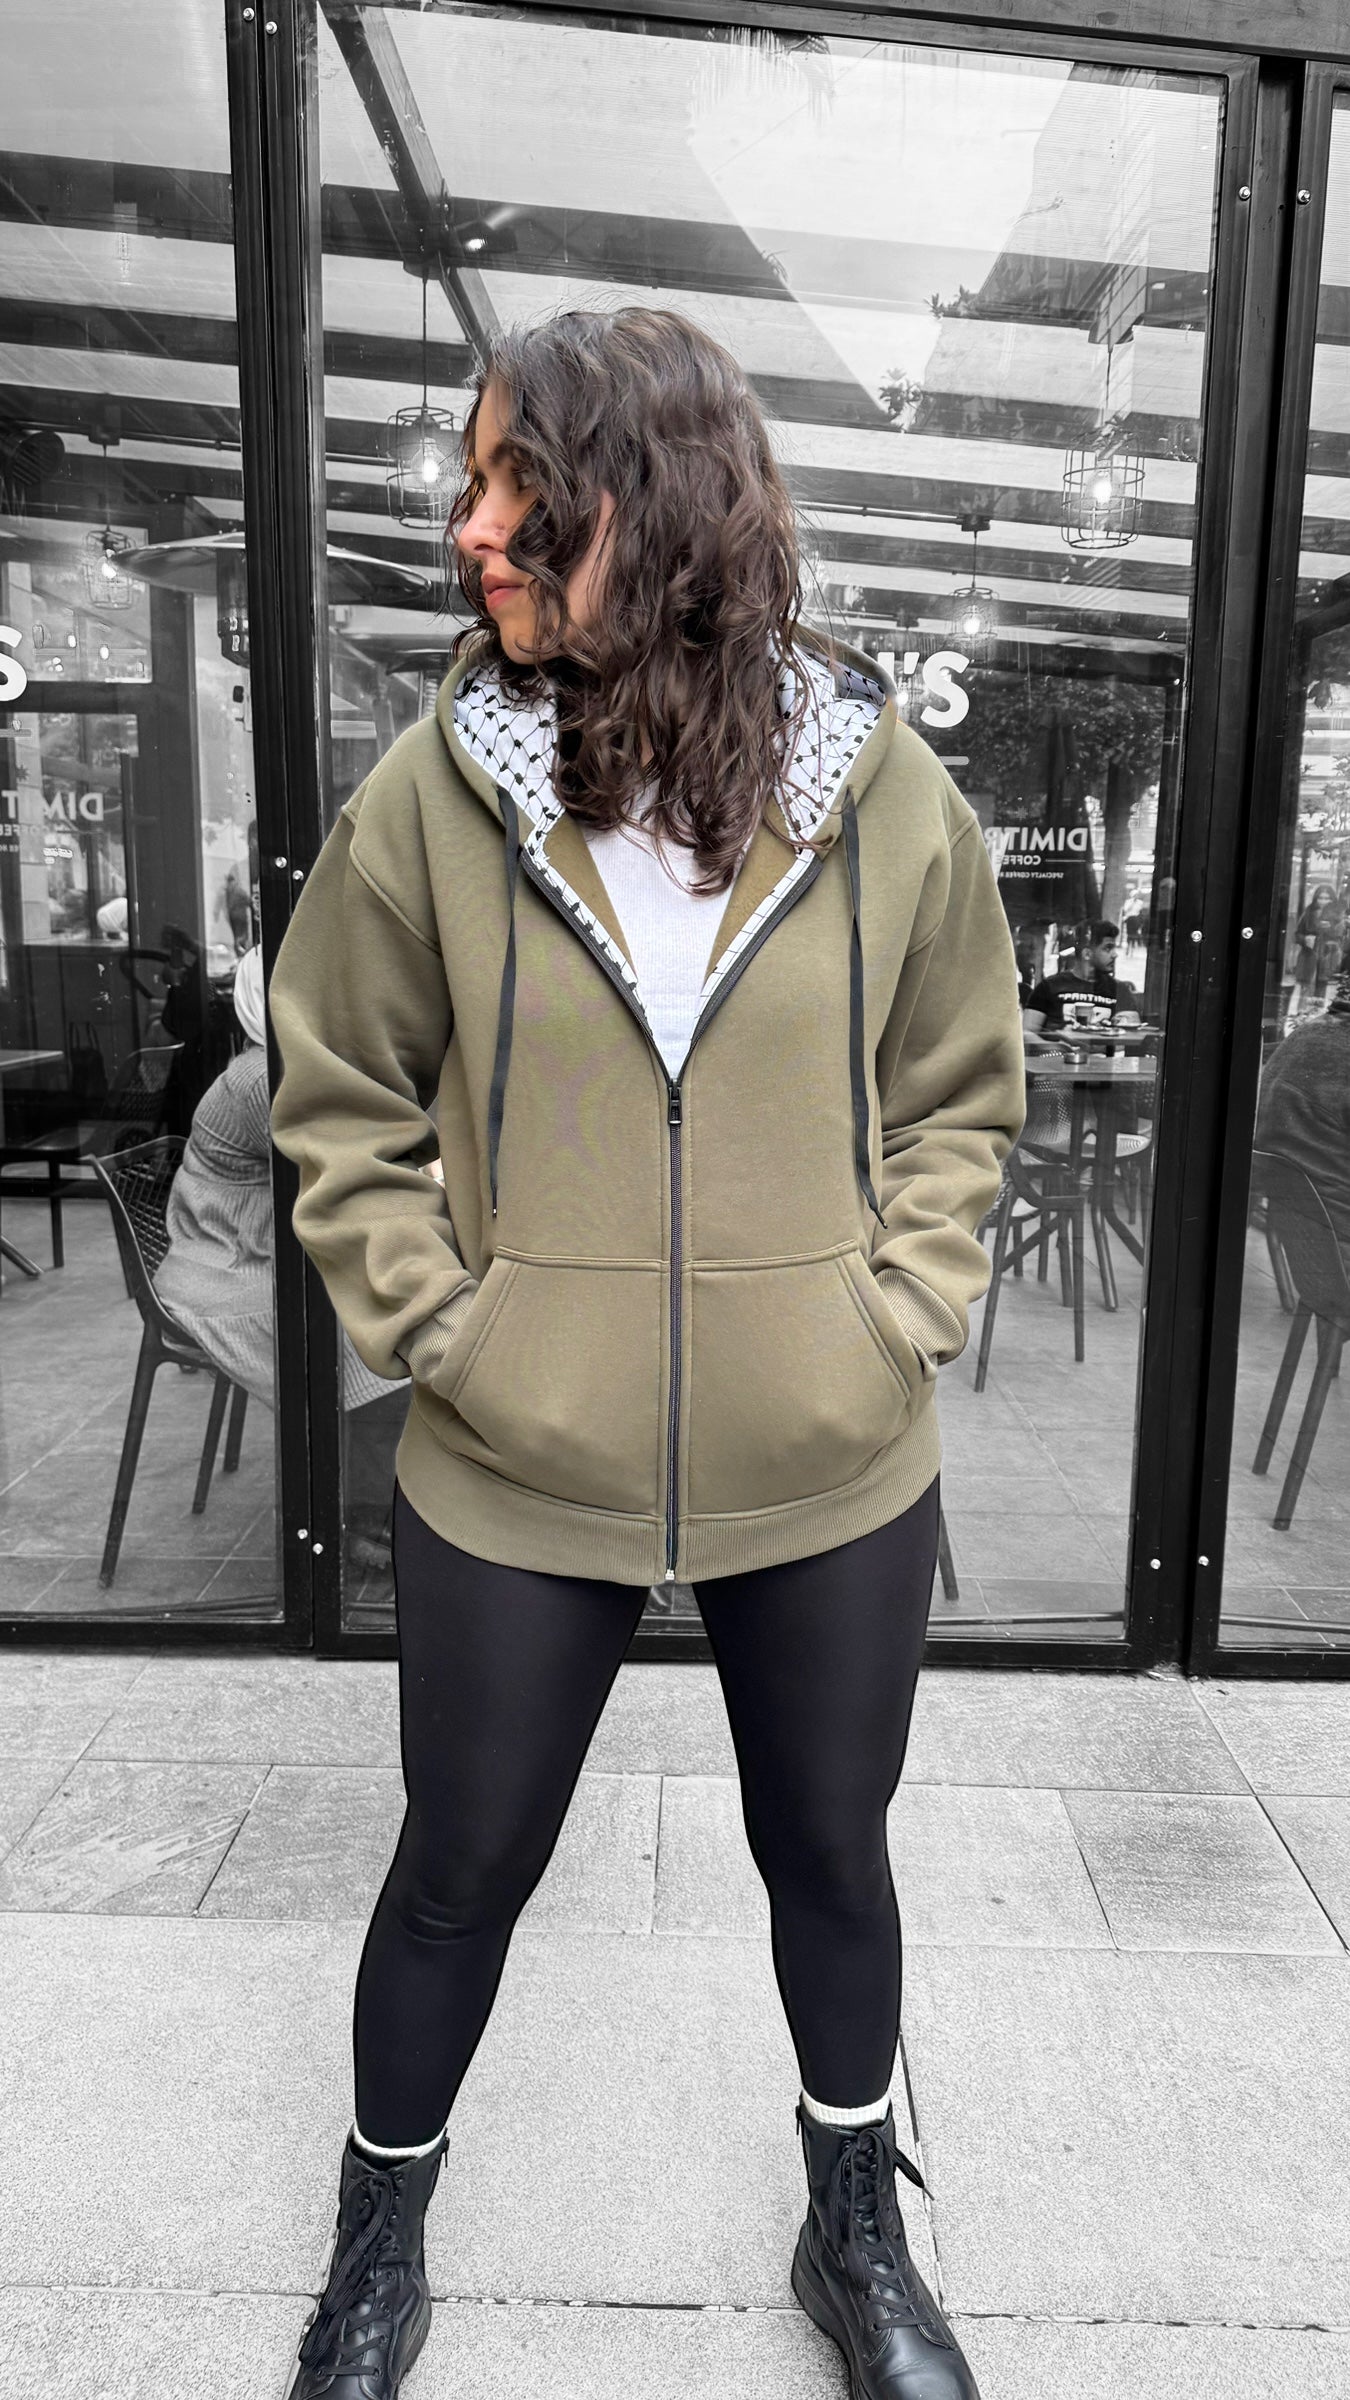 Pal Zipped hoodie - Army Green